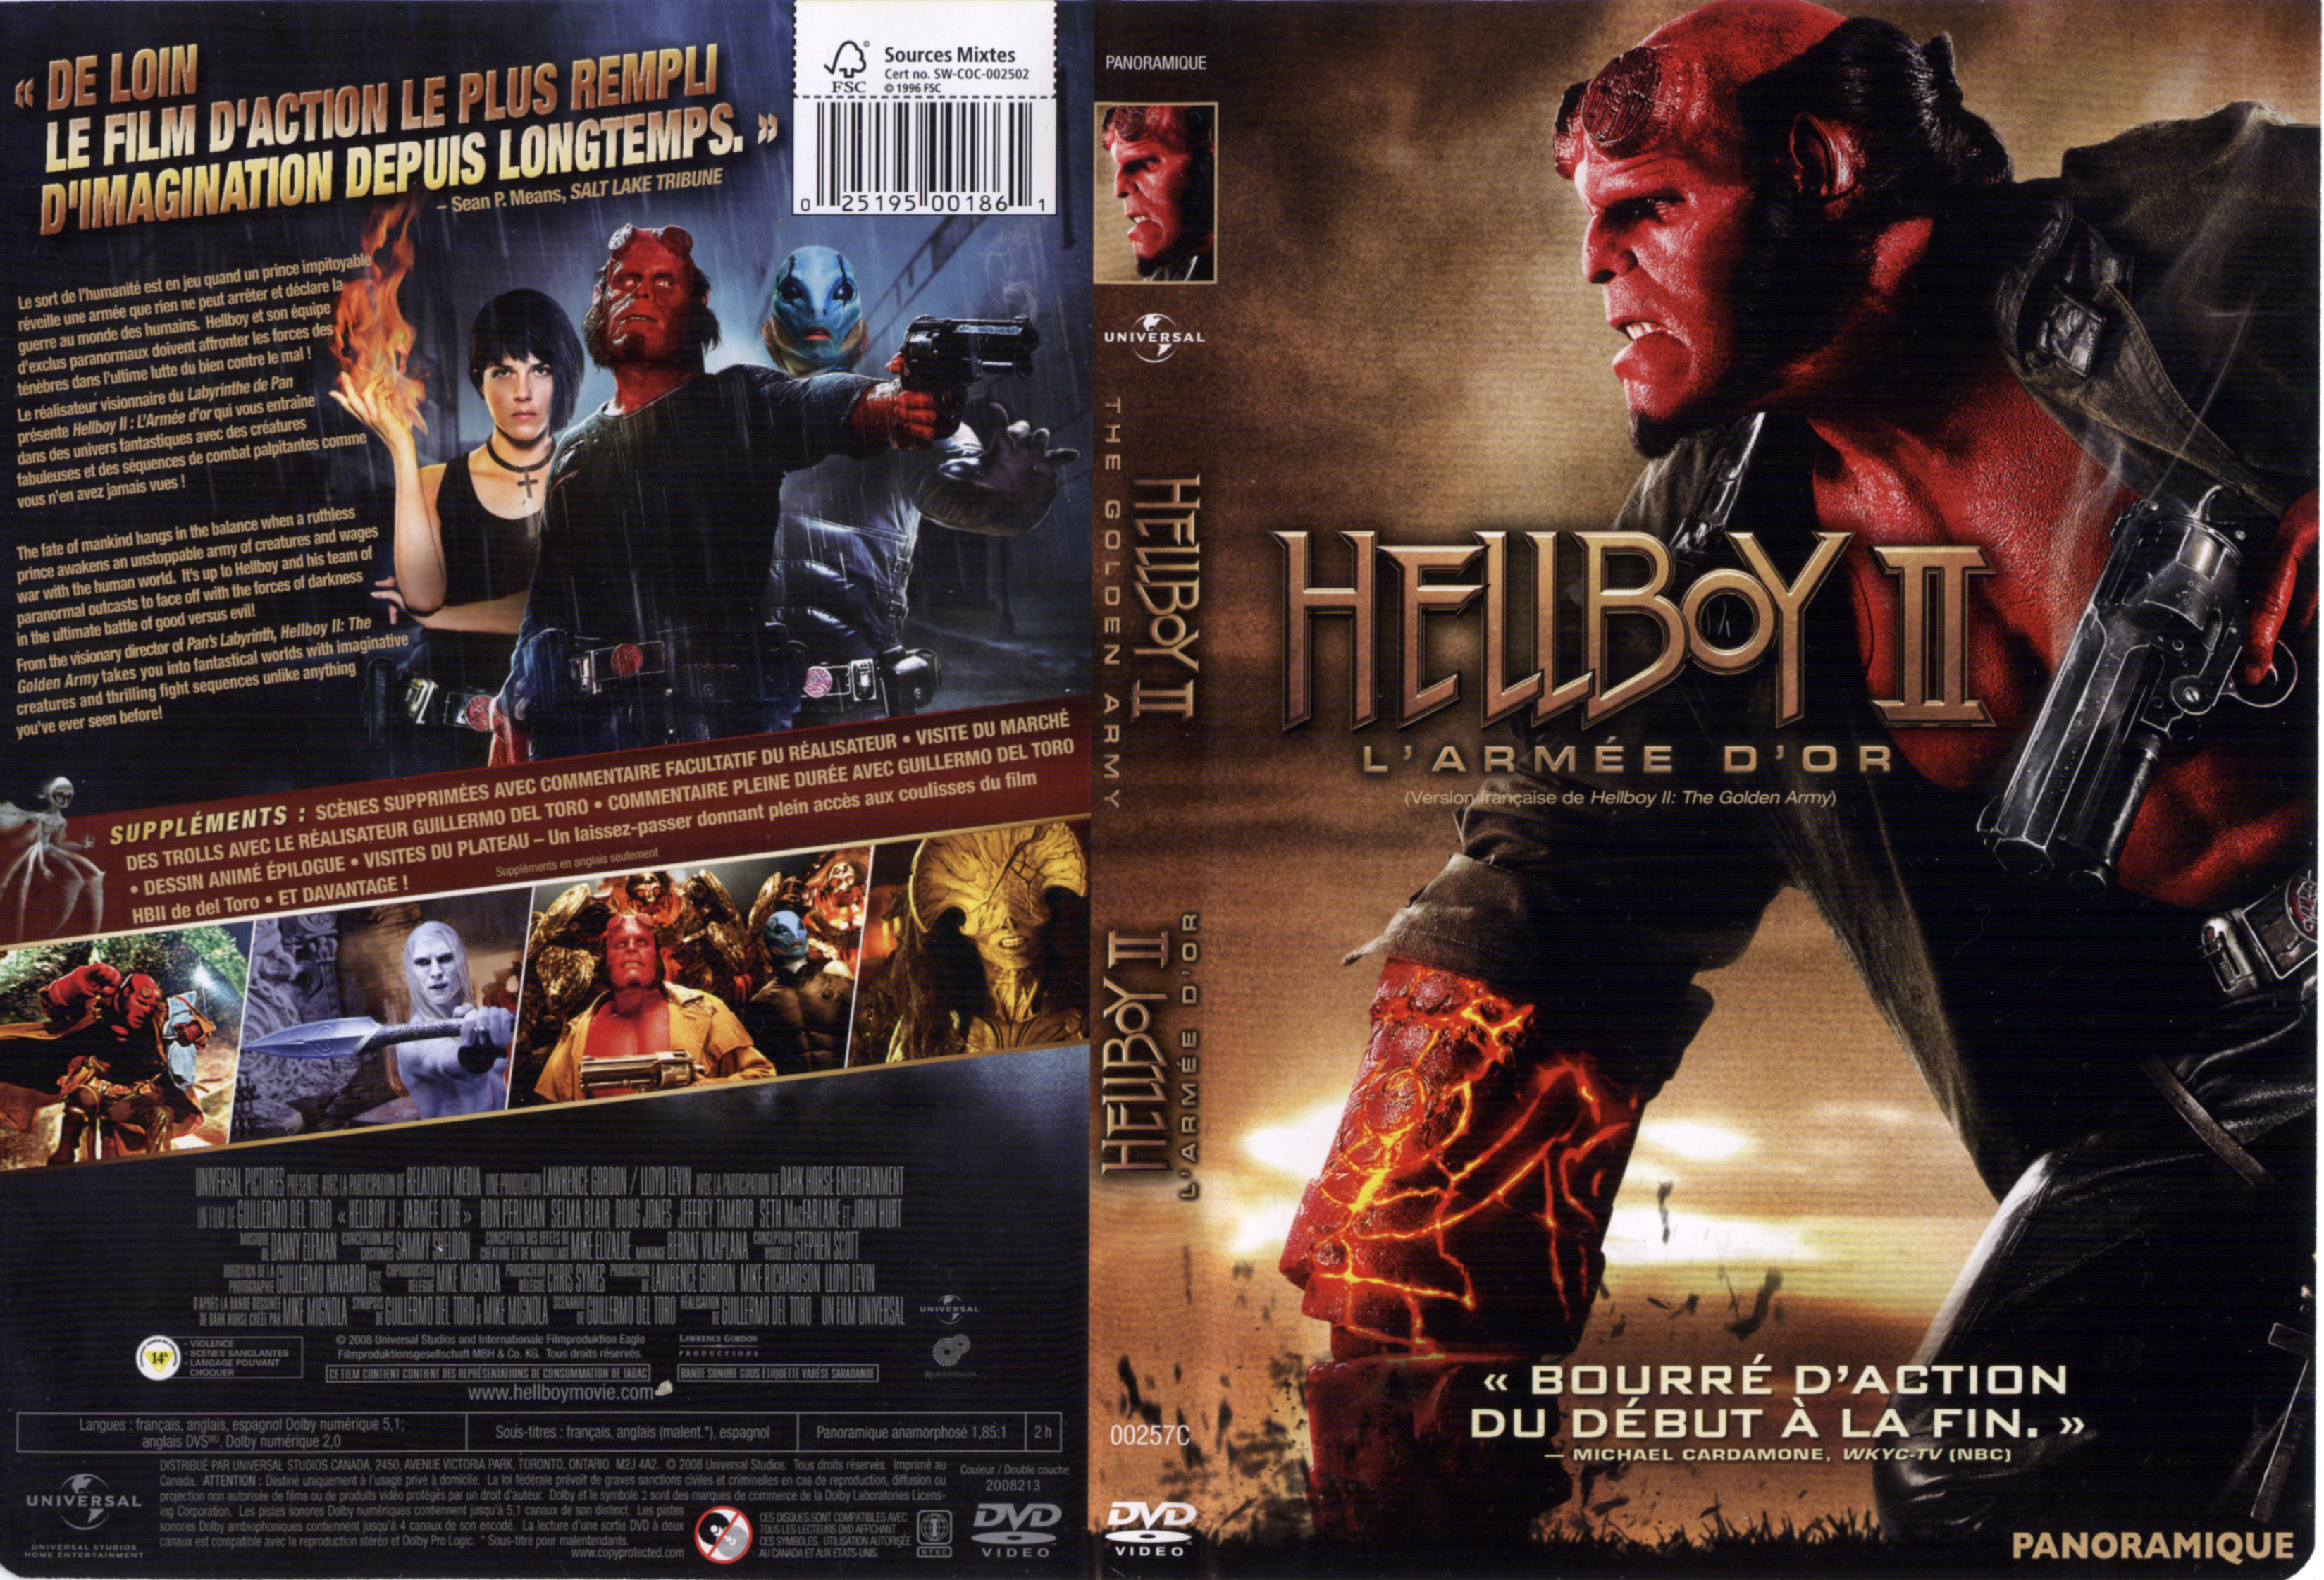 Jaquette DVD Hellboy 2 (Canadienne)